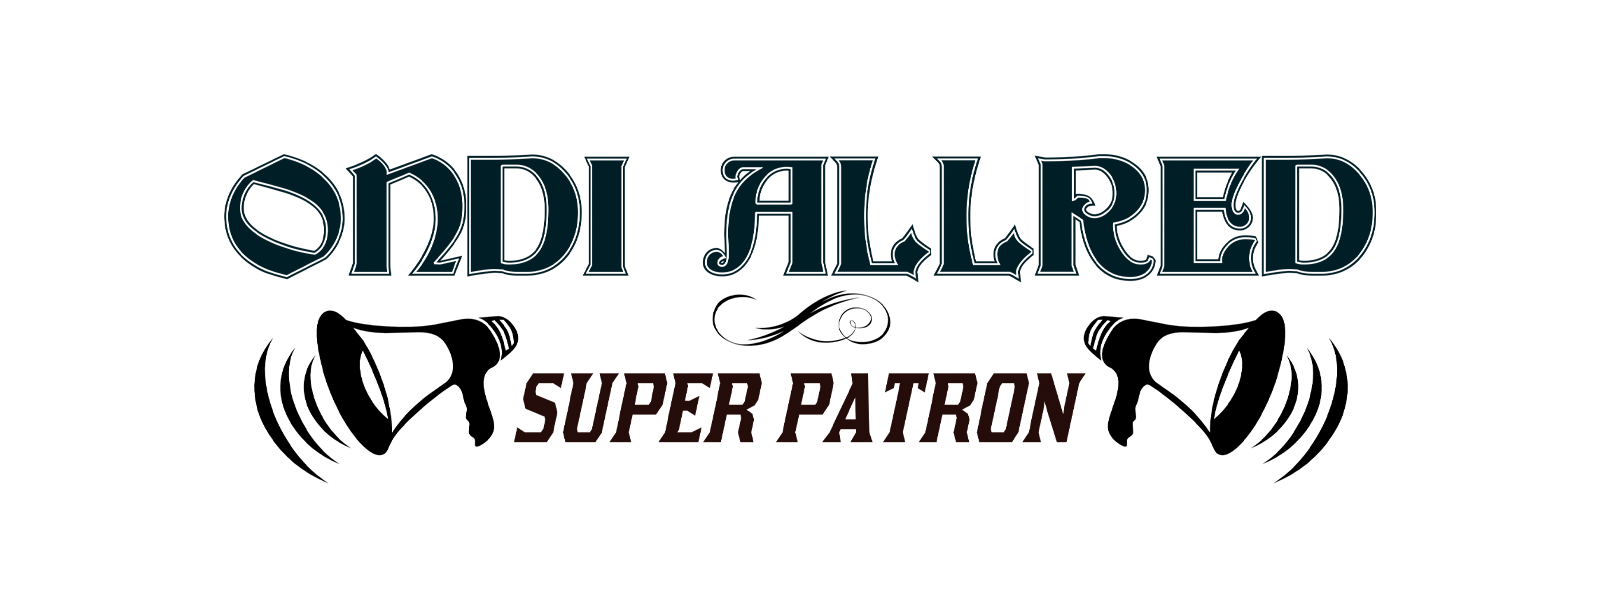 Ondi-Allred-Super Patron.png